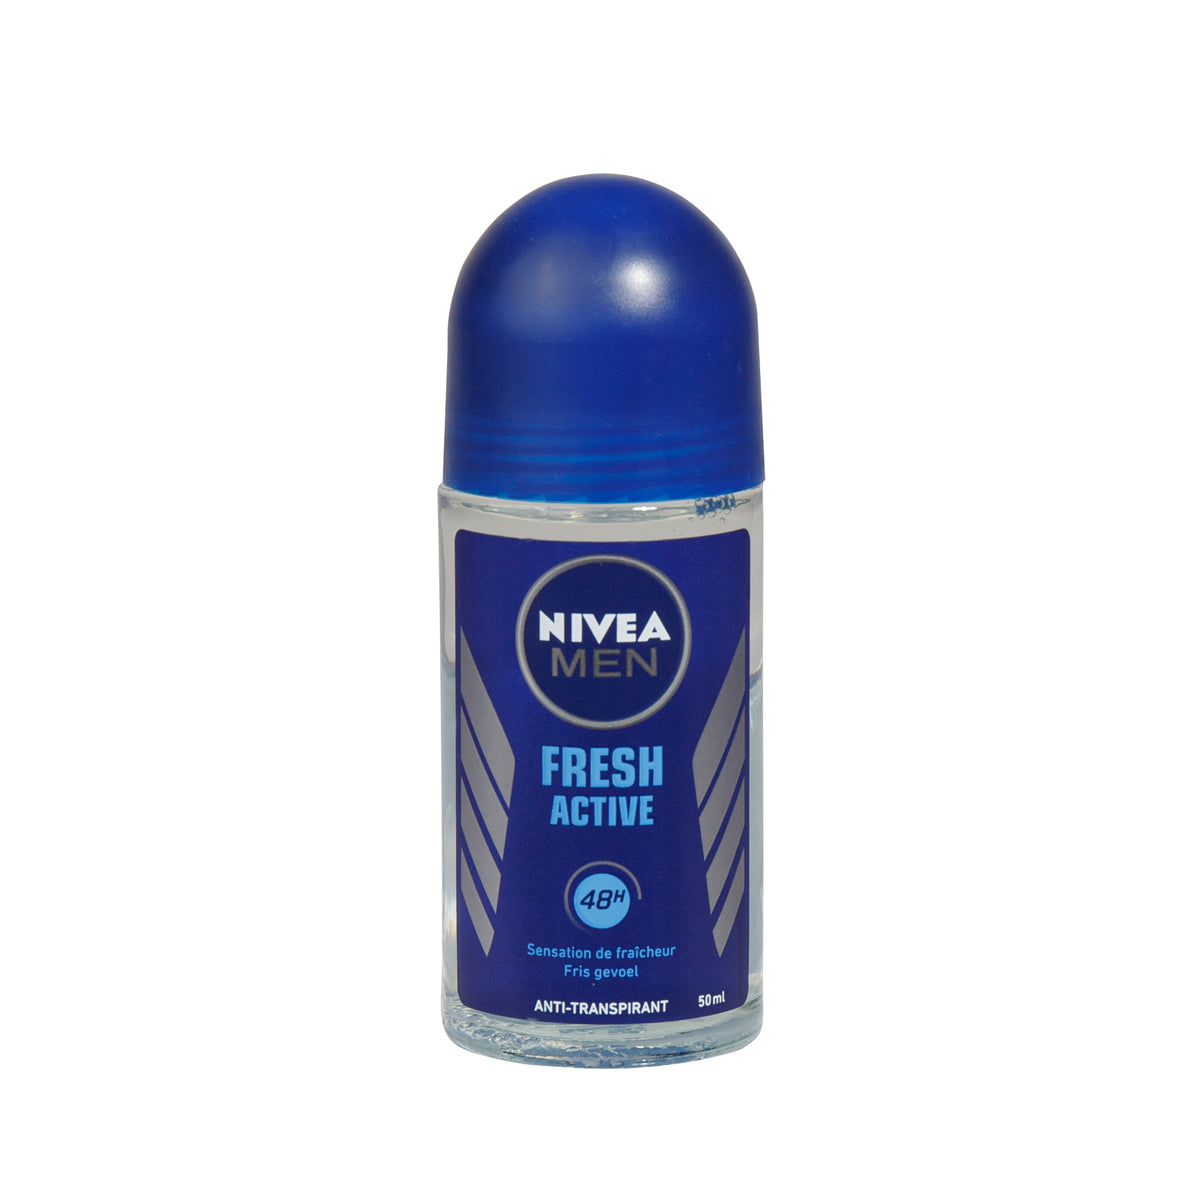 Primary Image of Men's Roll-On Fresh Active Anti-Perspirant Deodorant